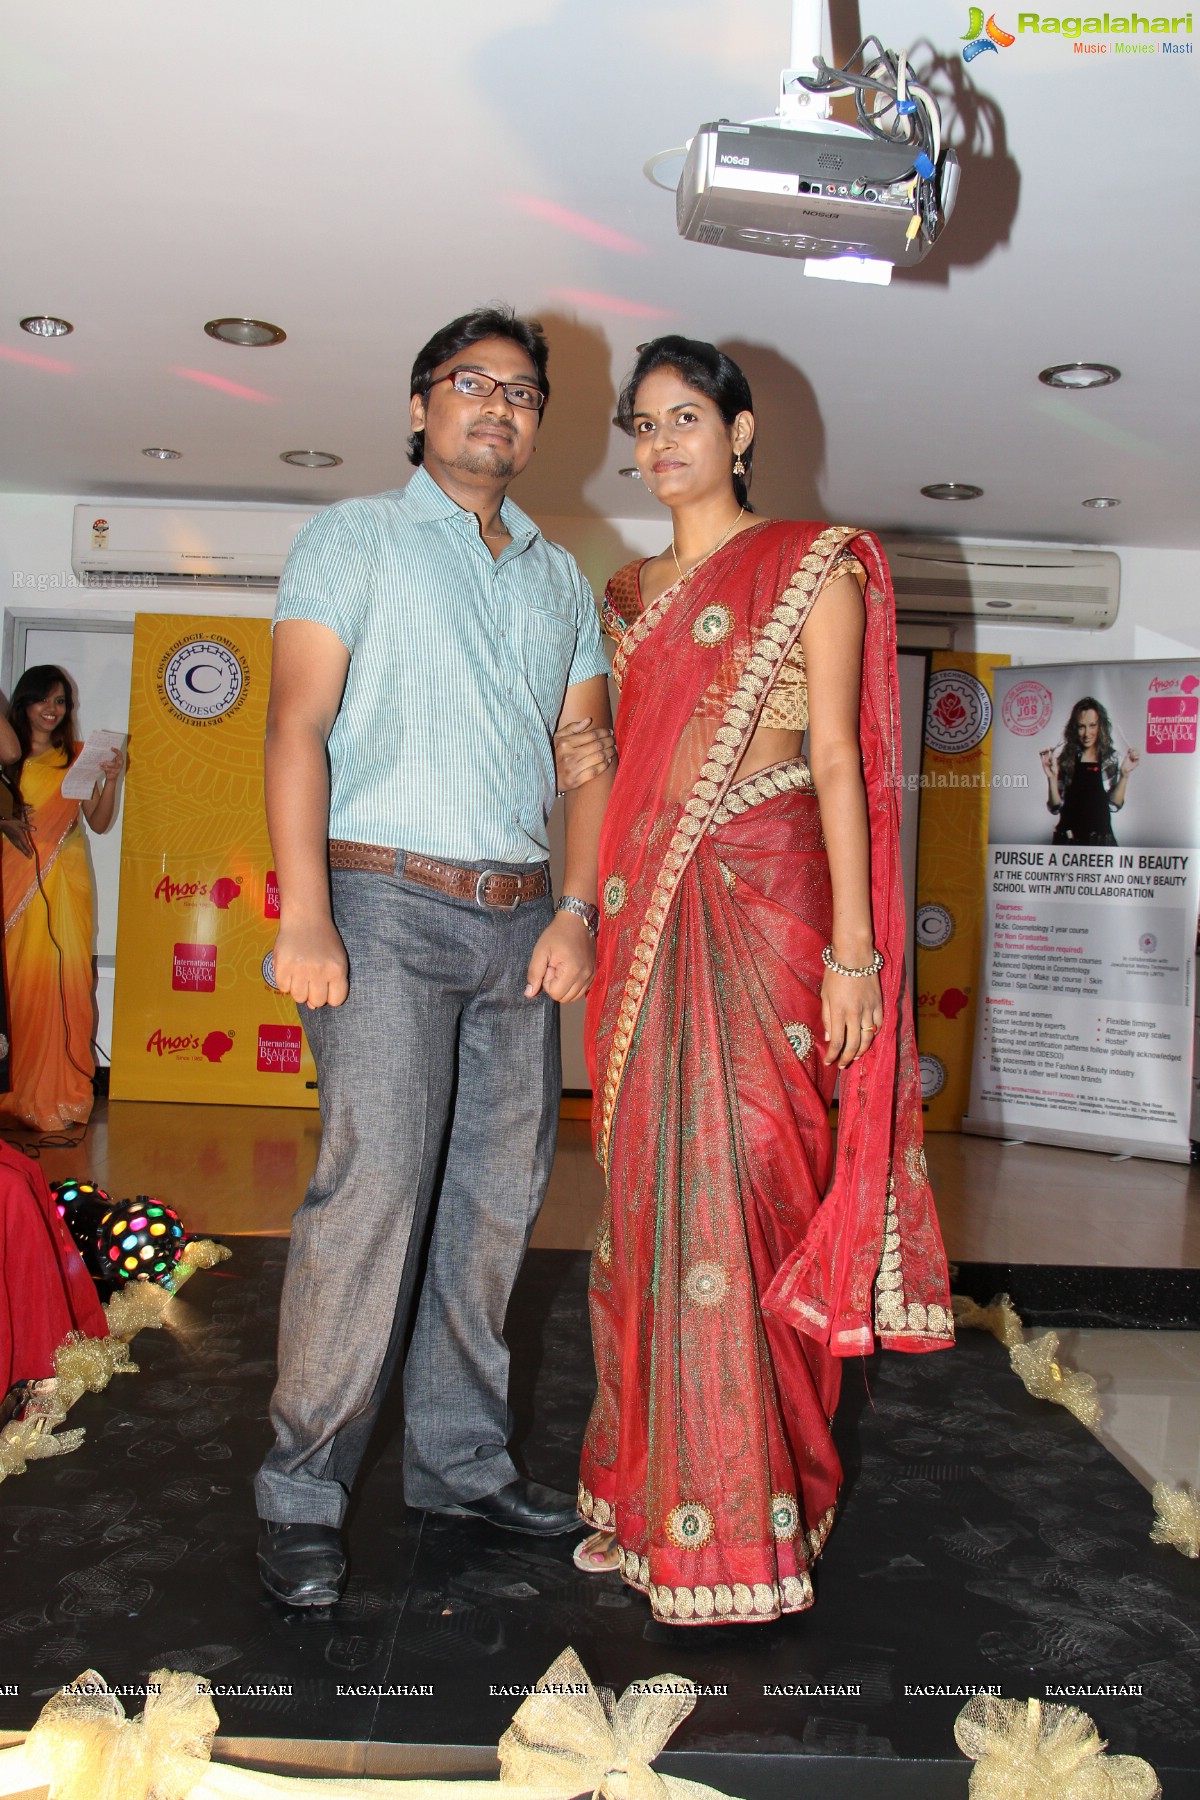 Anoo's International Beauty School 7th Convocation Ceremony, Hyderabad